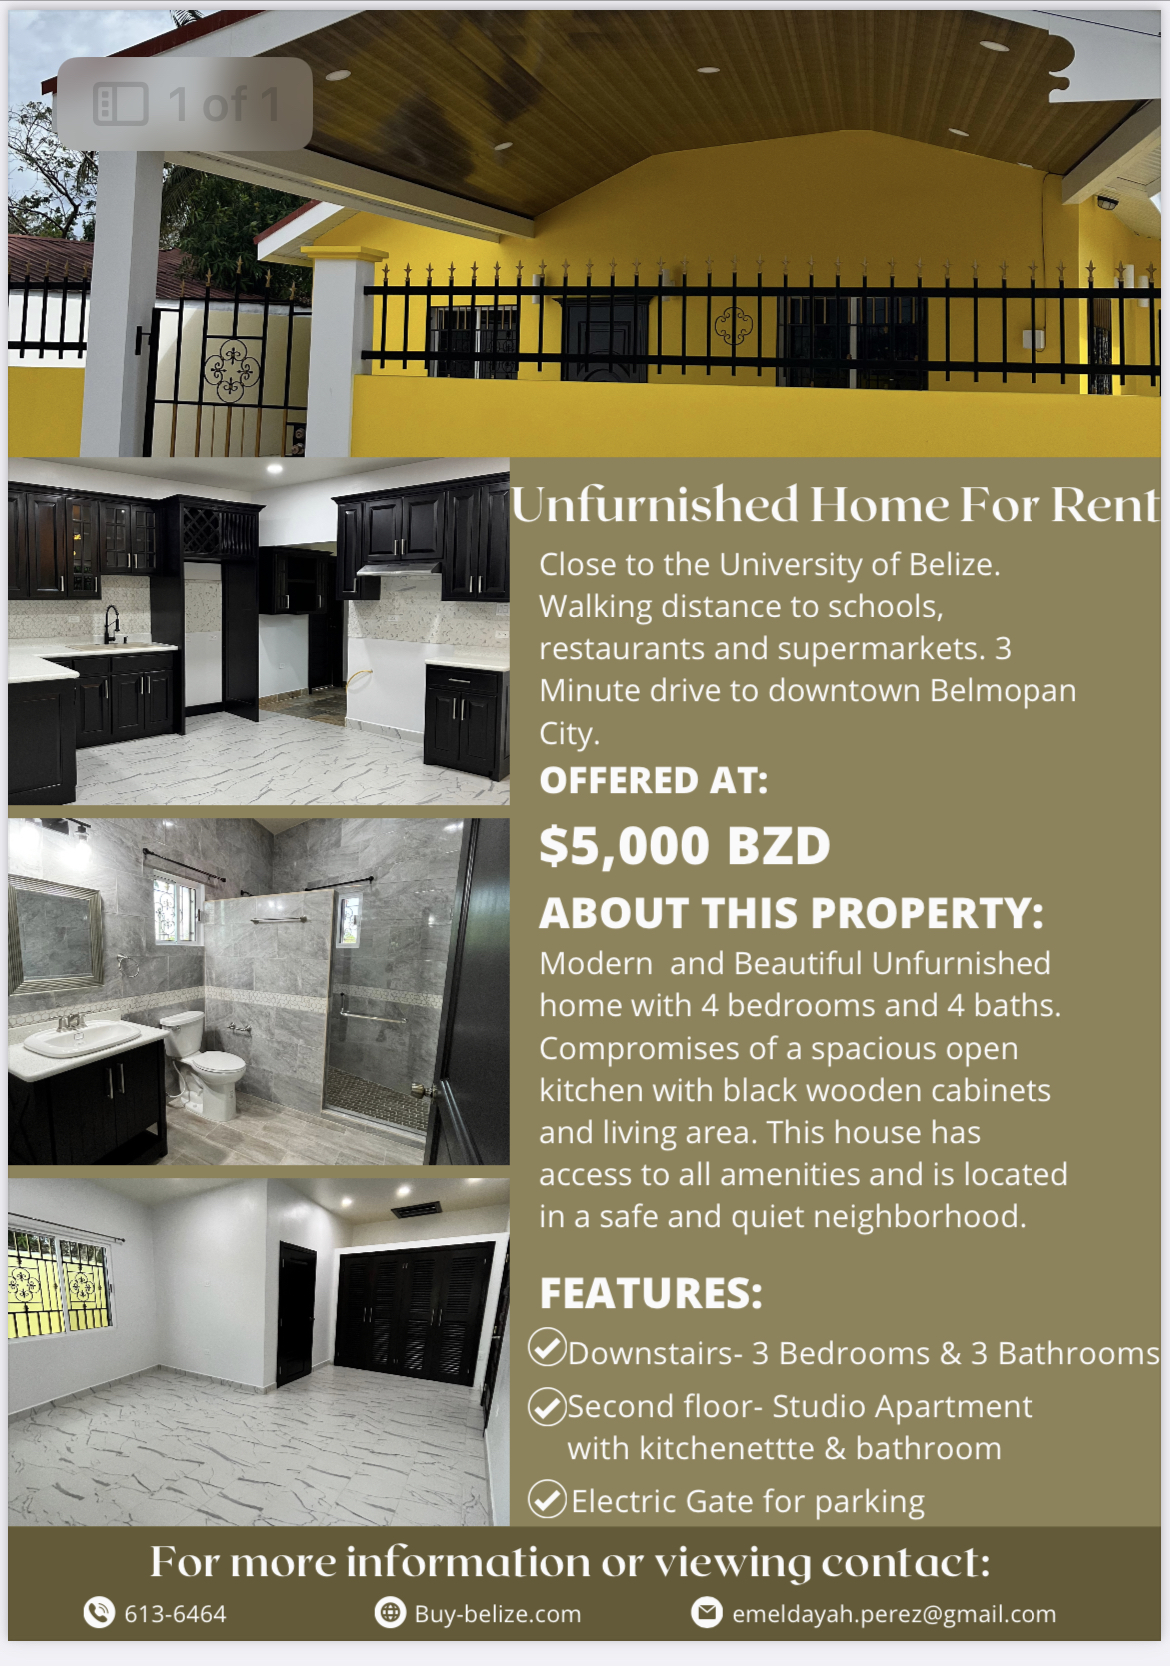 Unfurnished 4 bedroom/4 Bathroom Home for Rent in Belmopan